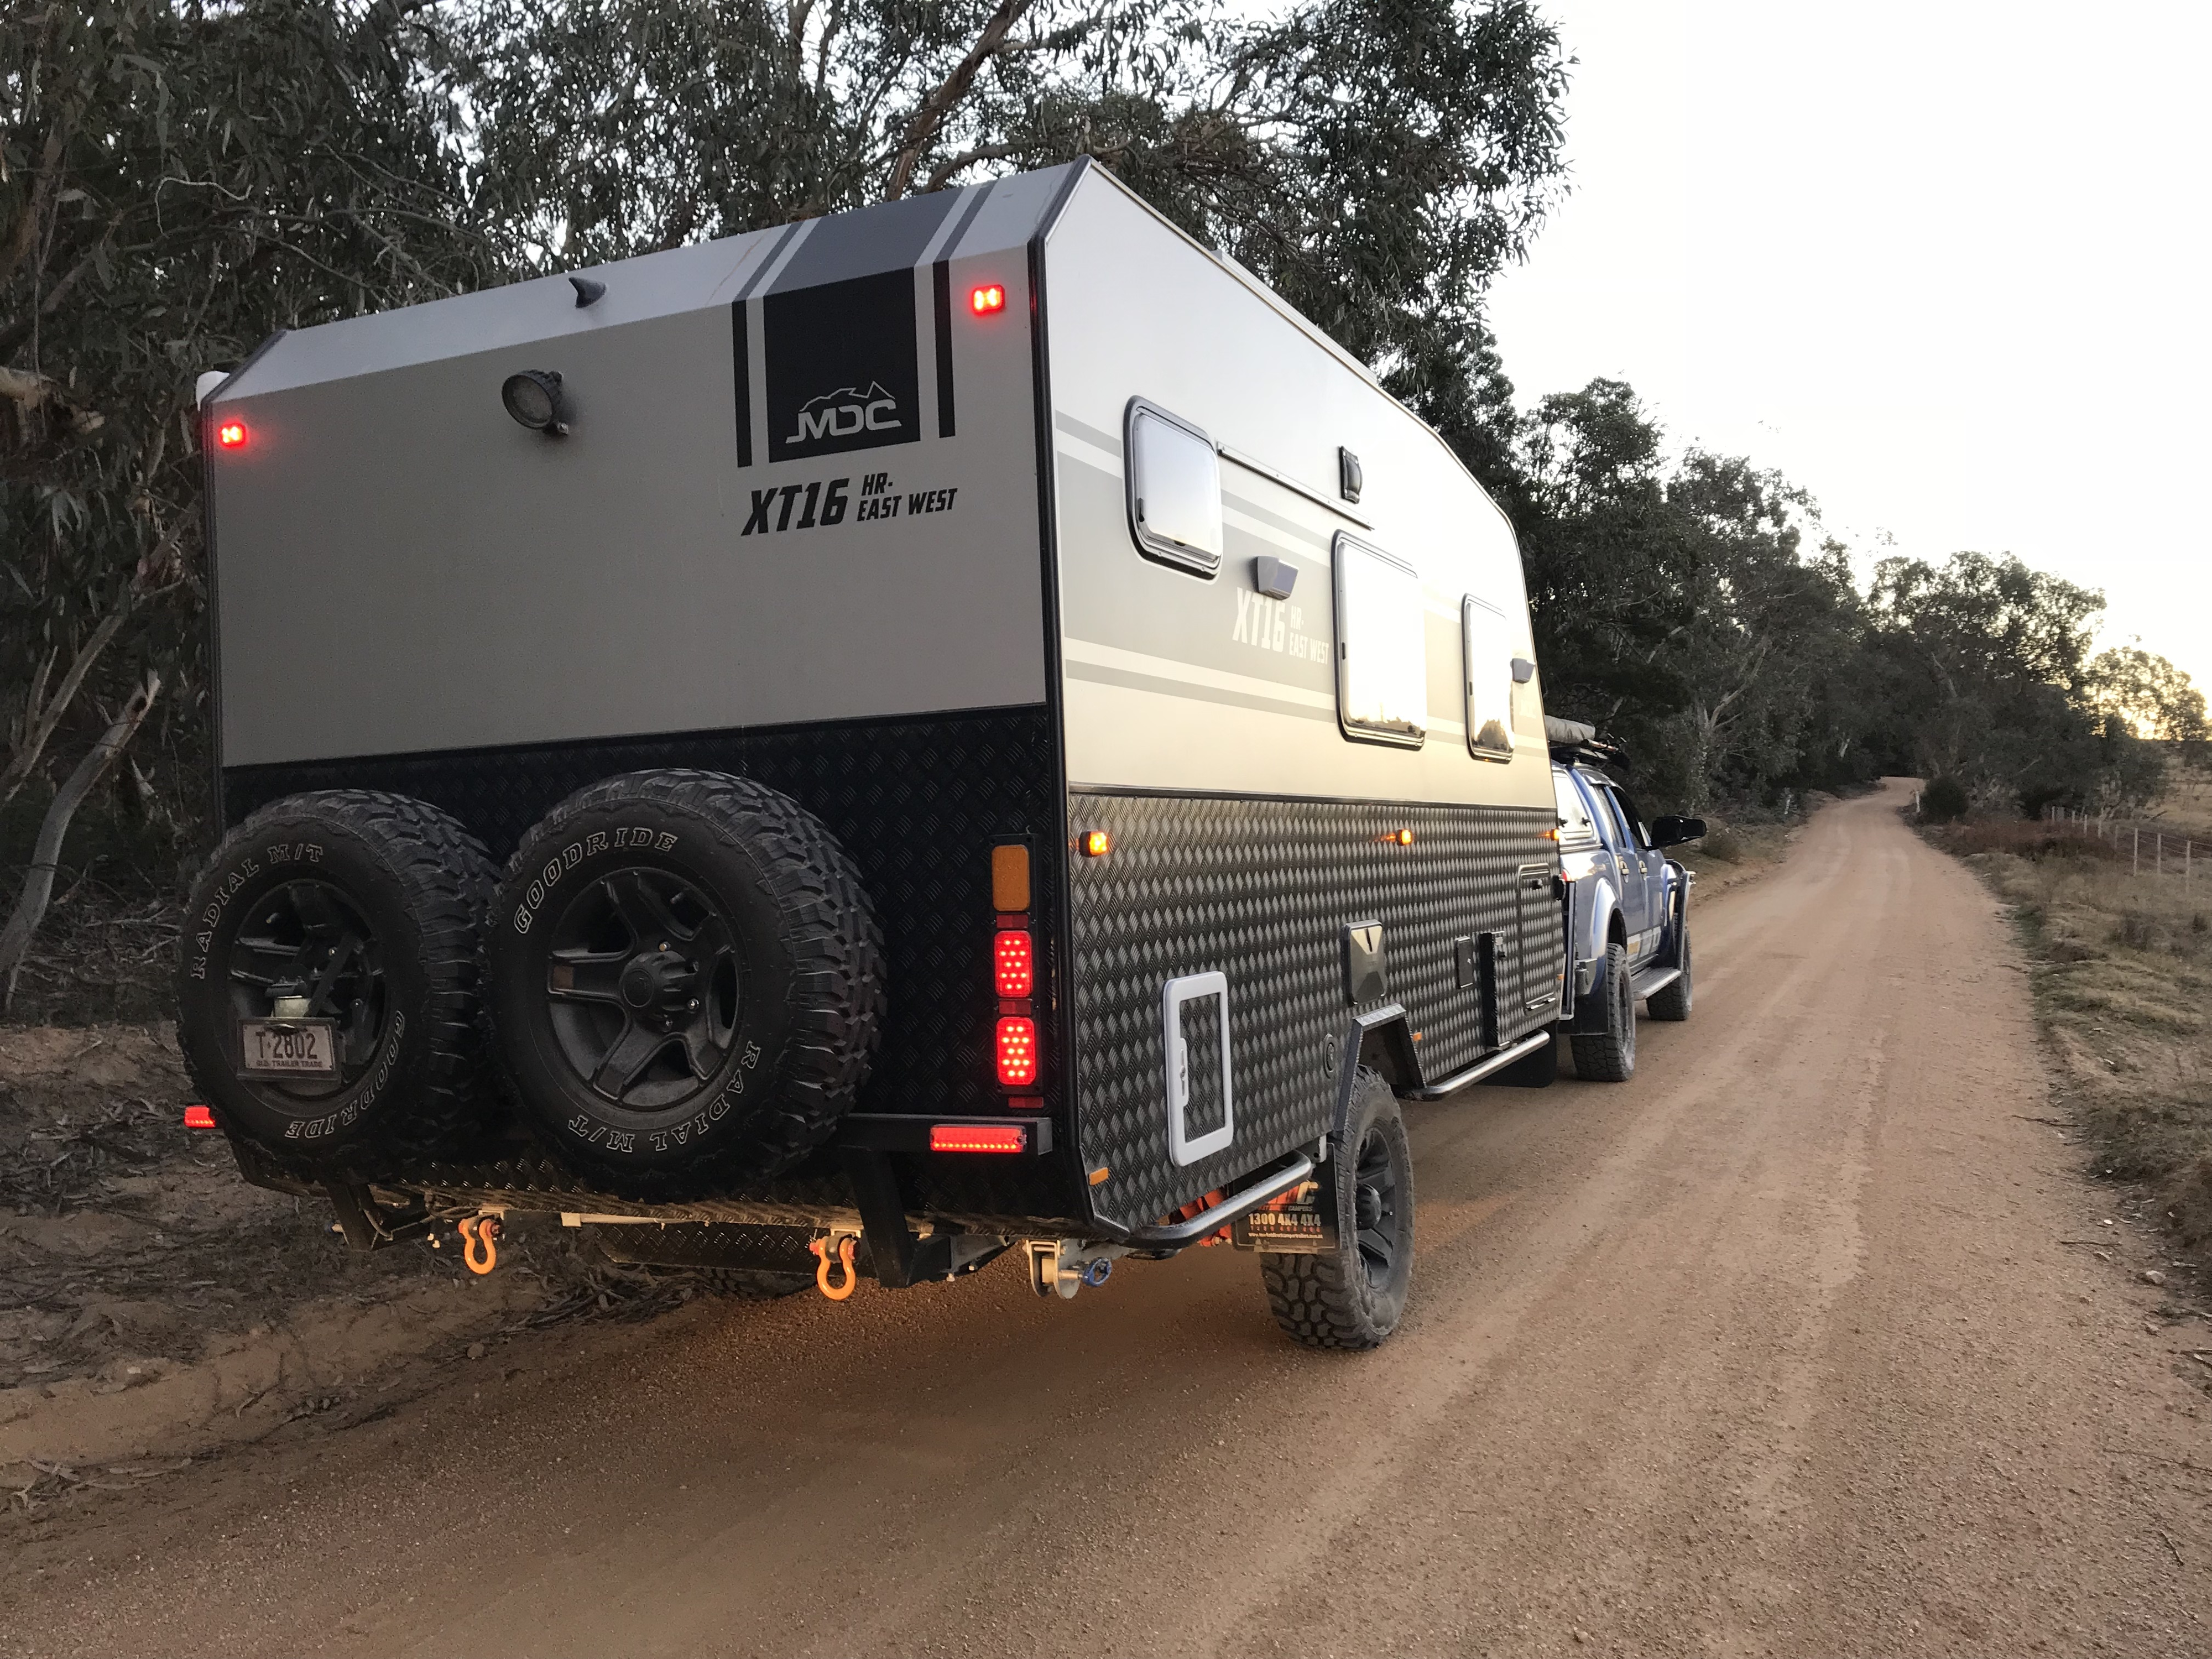 Road Trips Australia Episode 17